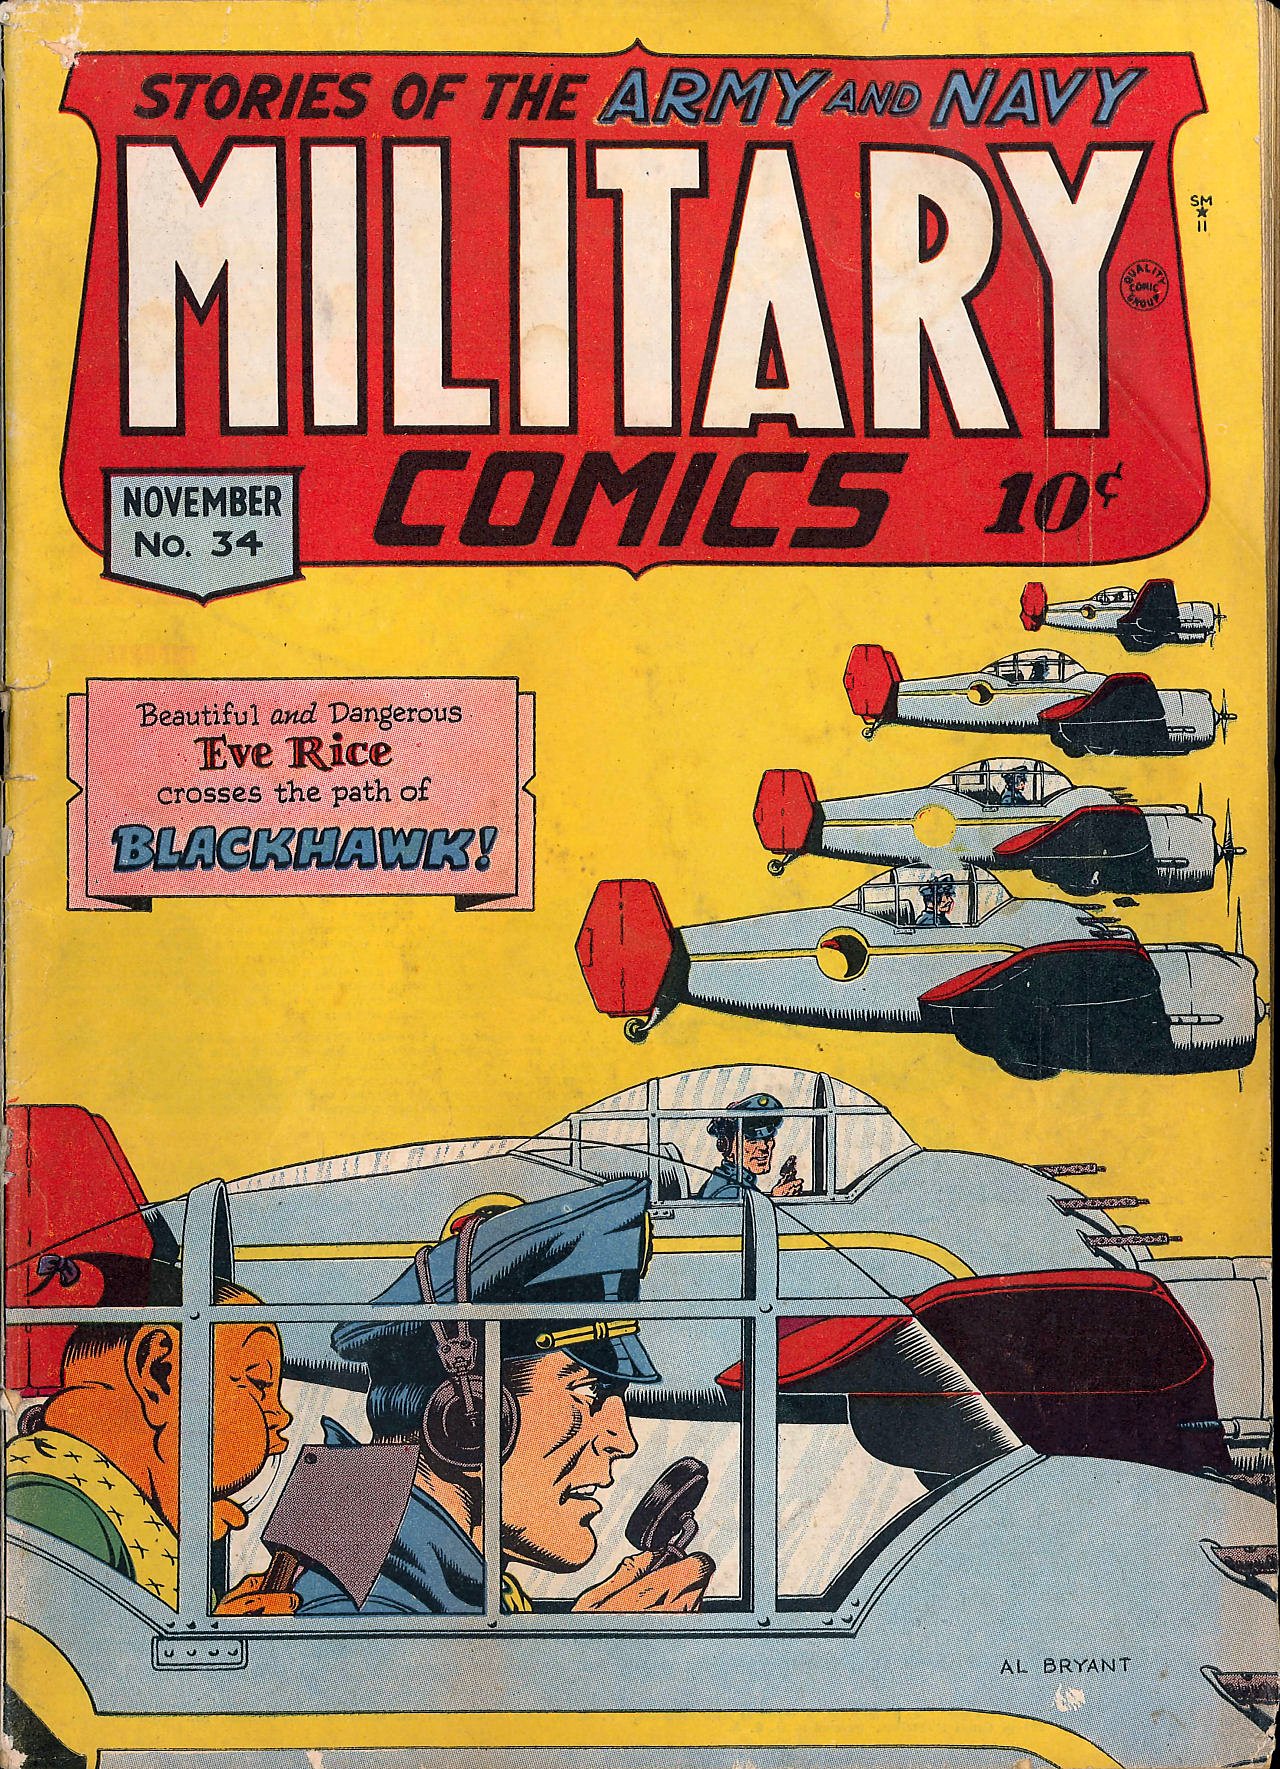 Military Comics #10